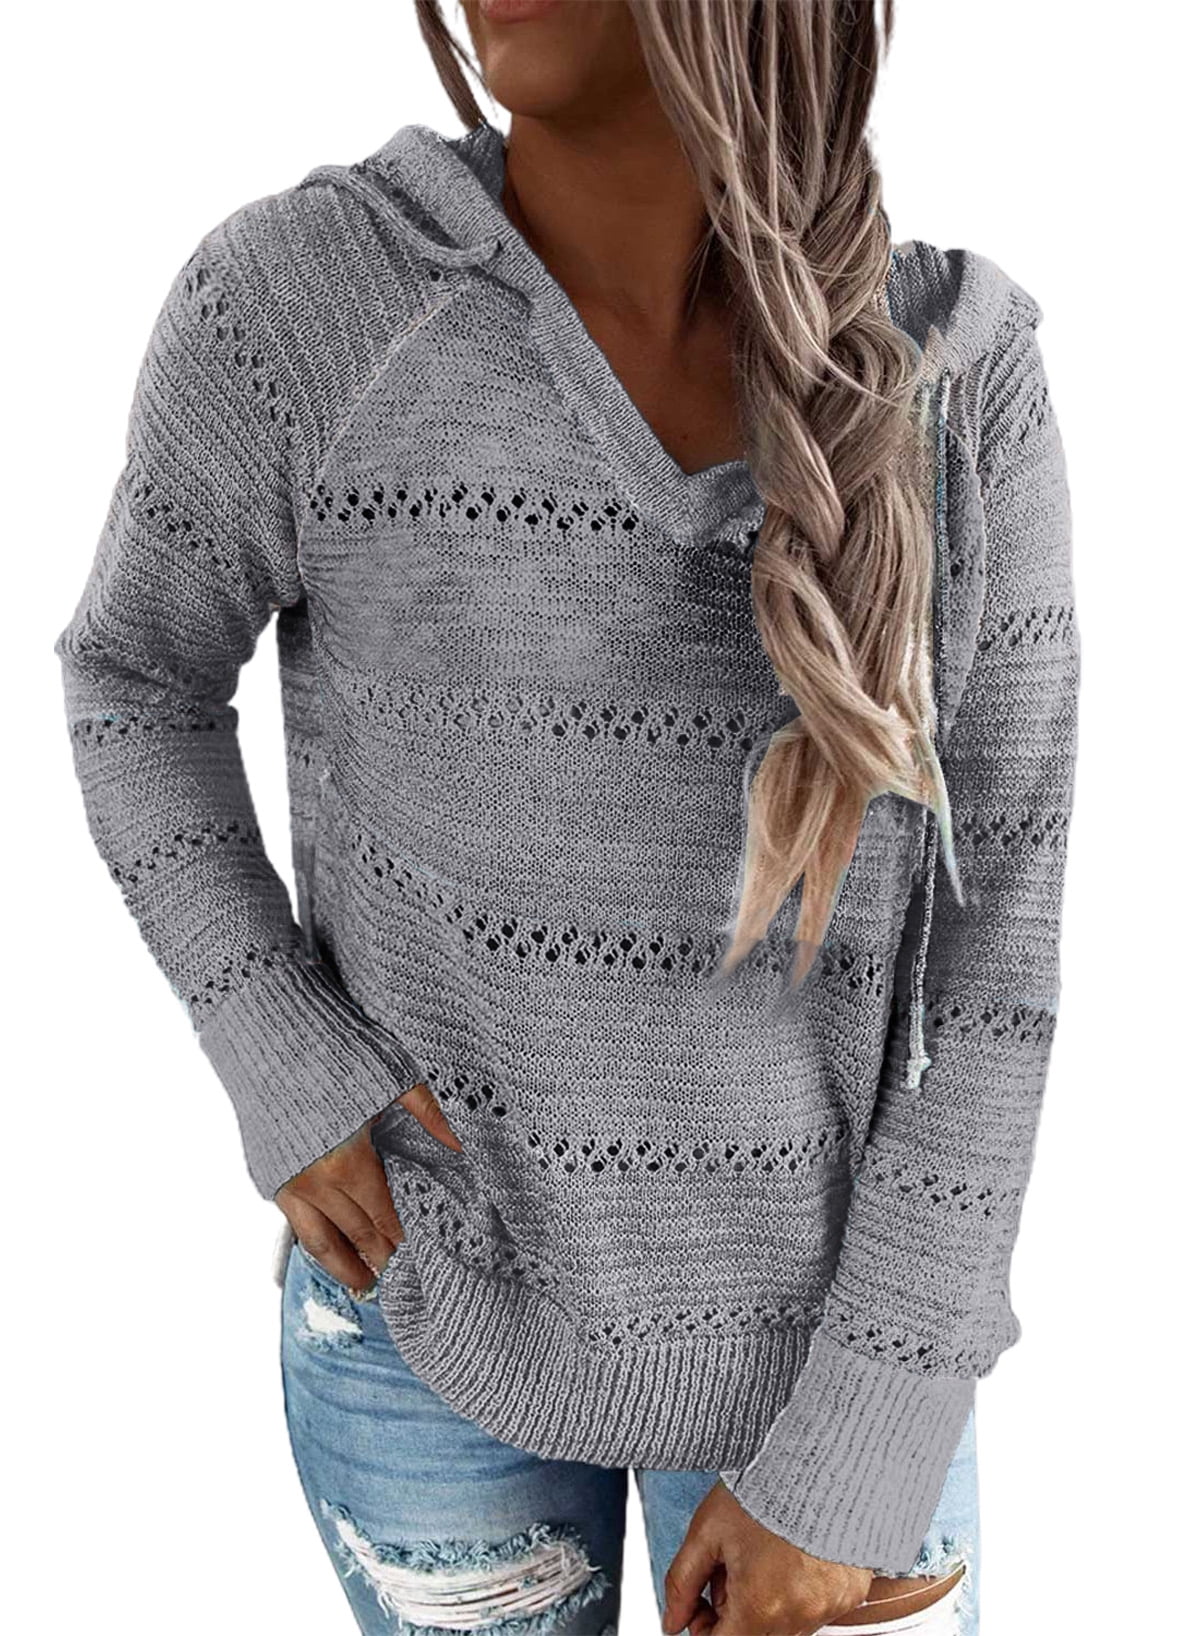 HOTAPEI Hooded Sweaters for Women Long Sleeve Drawstring Hoodie